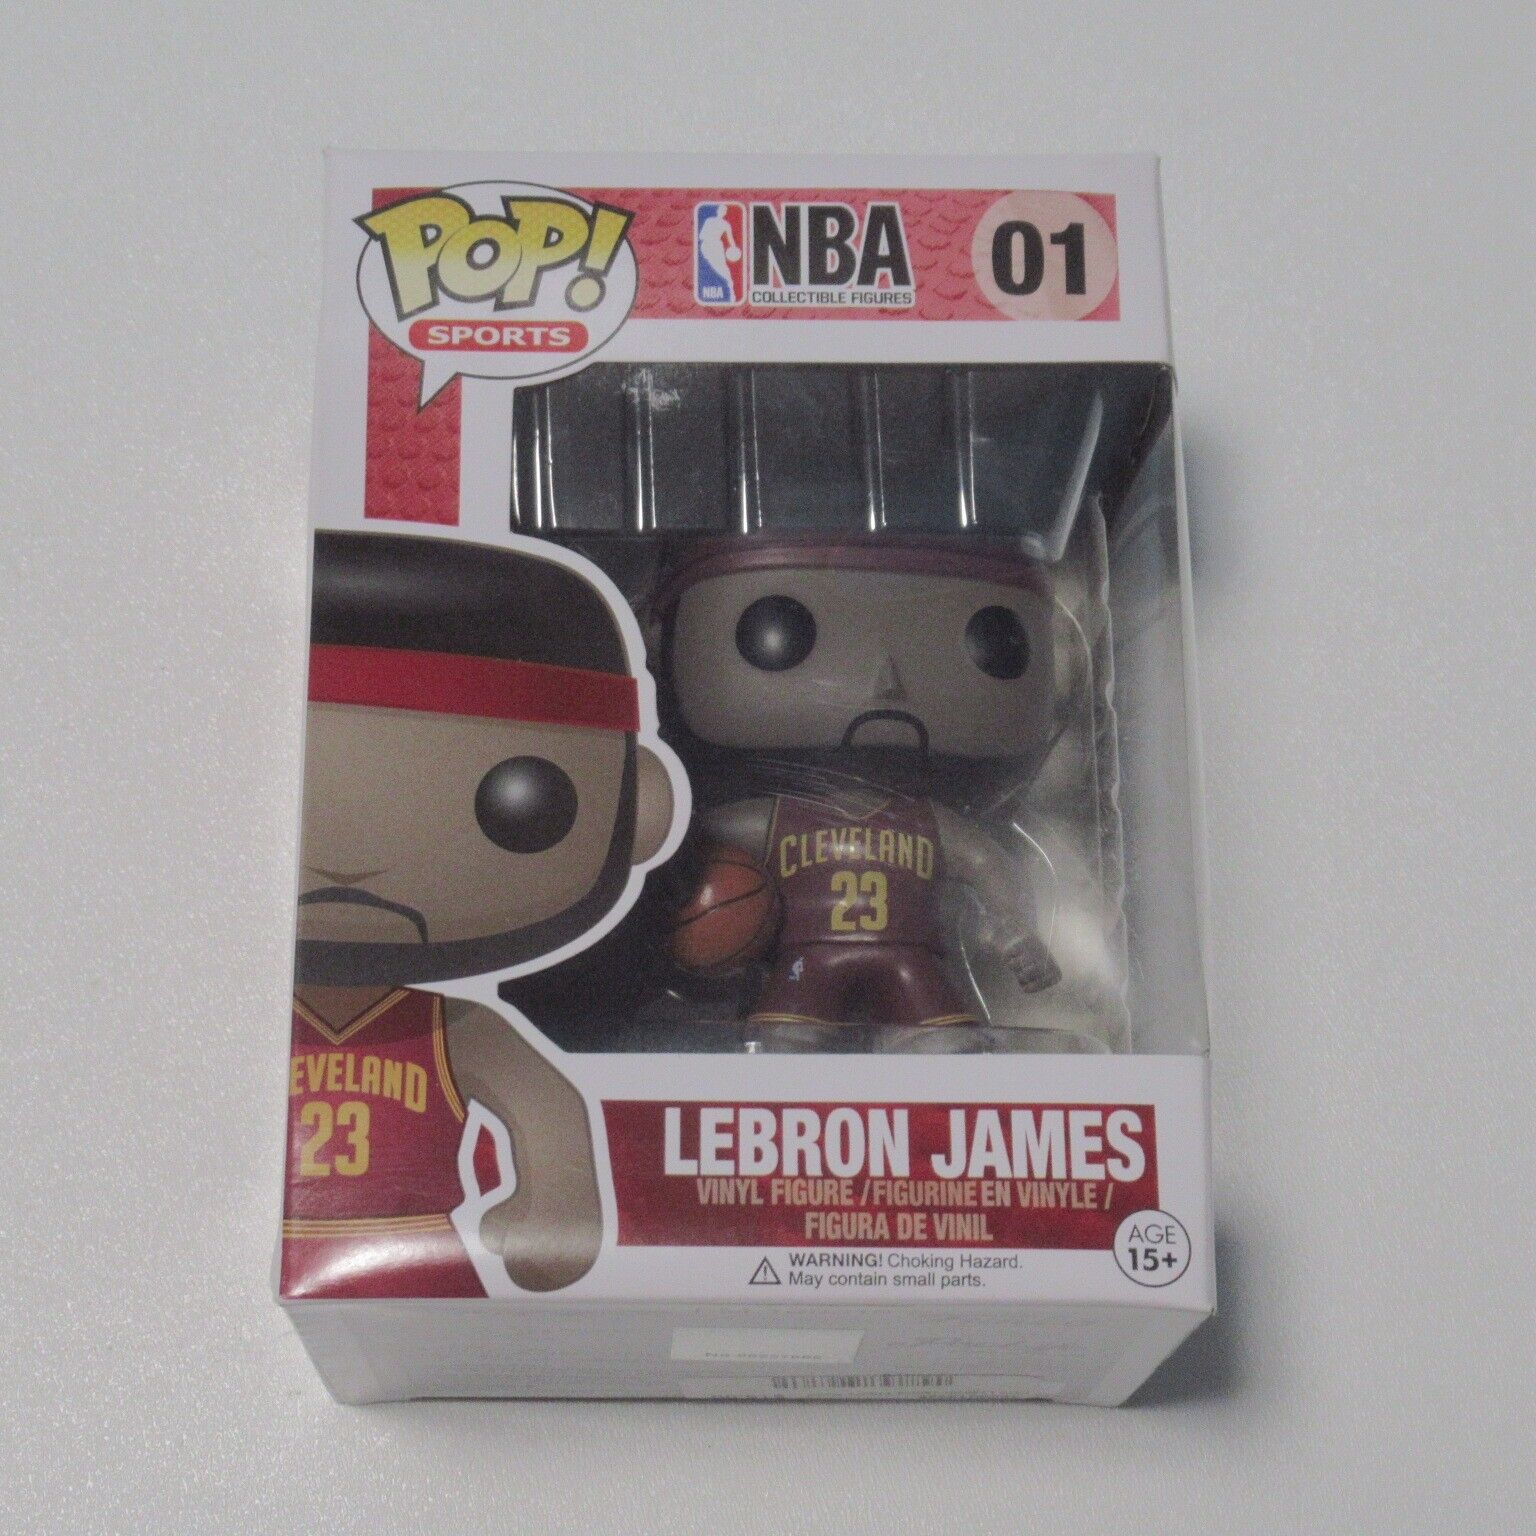 Lebron James Funko Pop #01 NBA Cleveland Cavaliers Red Jersey Vinyl Figure